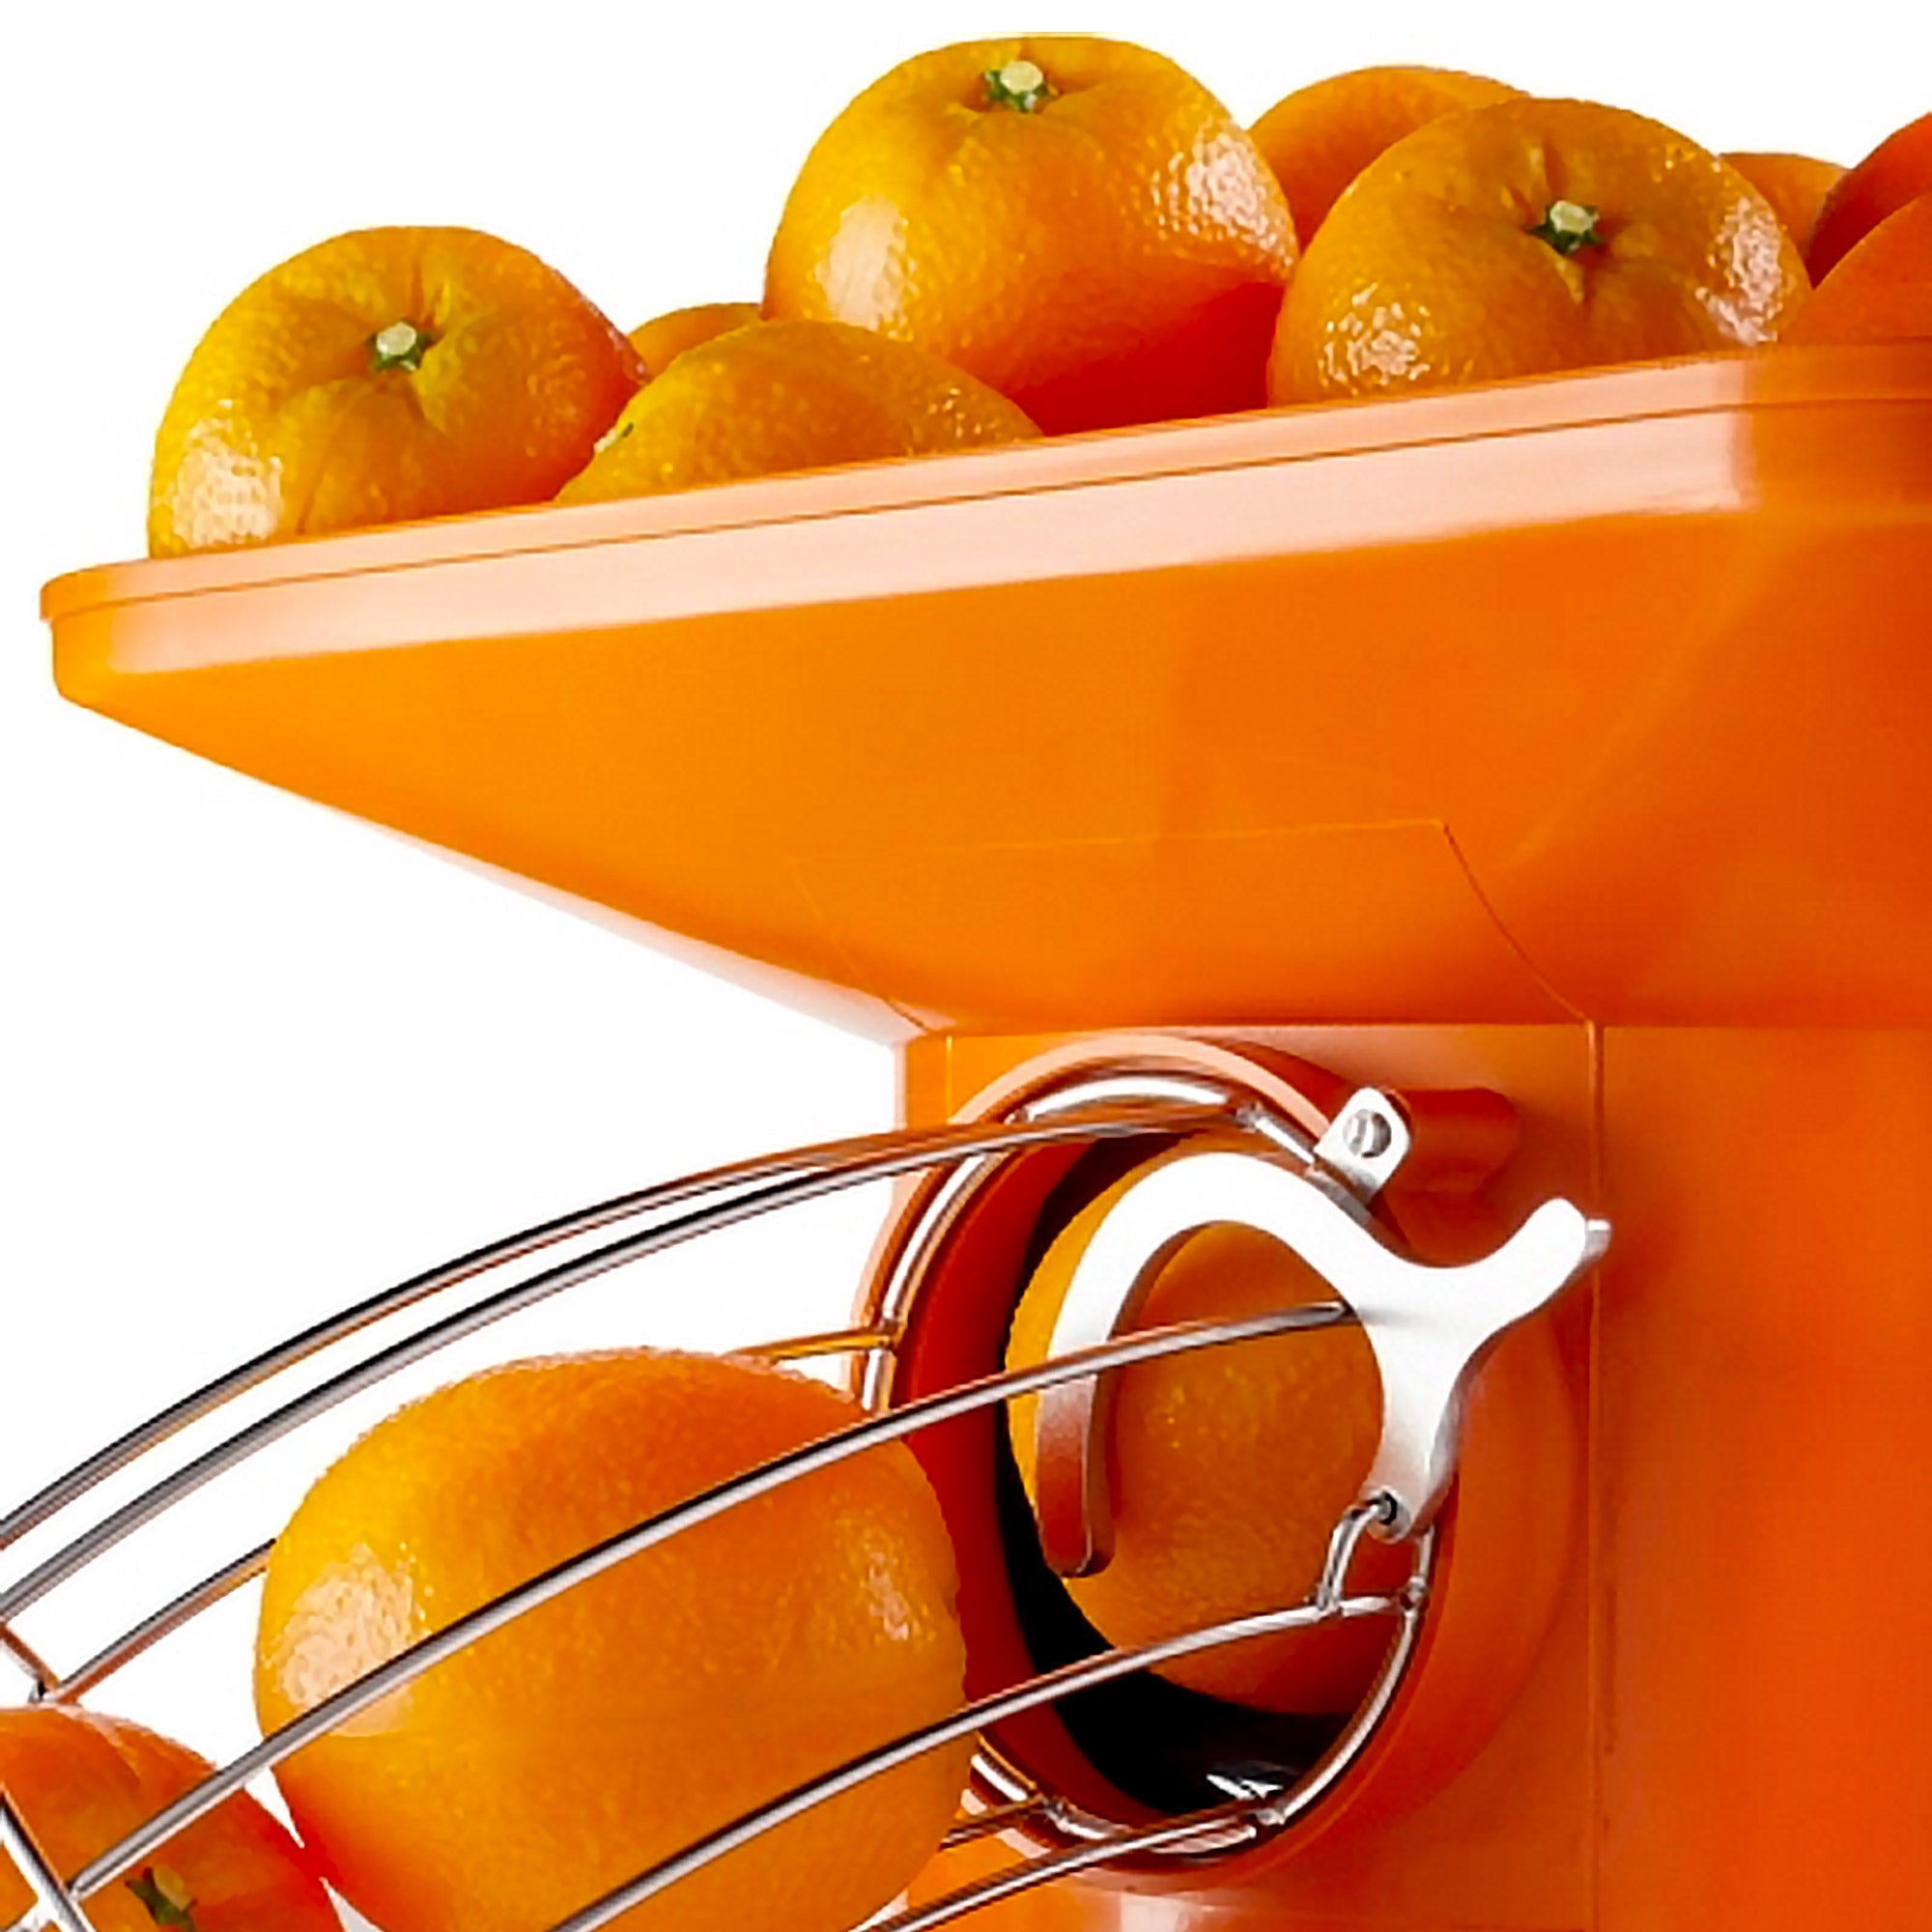 Elektrisk appelsinpresse - oransje - Automatisk parring - inkludert justerbar avløpskran